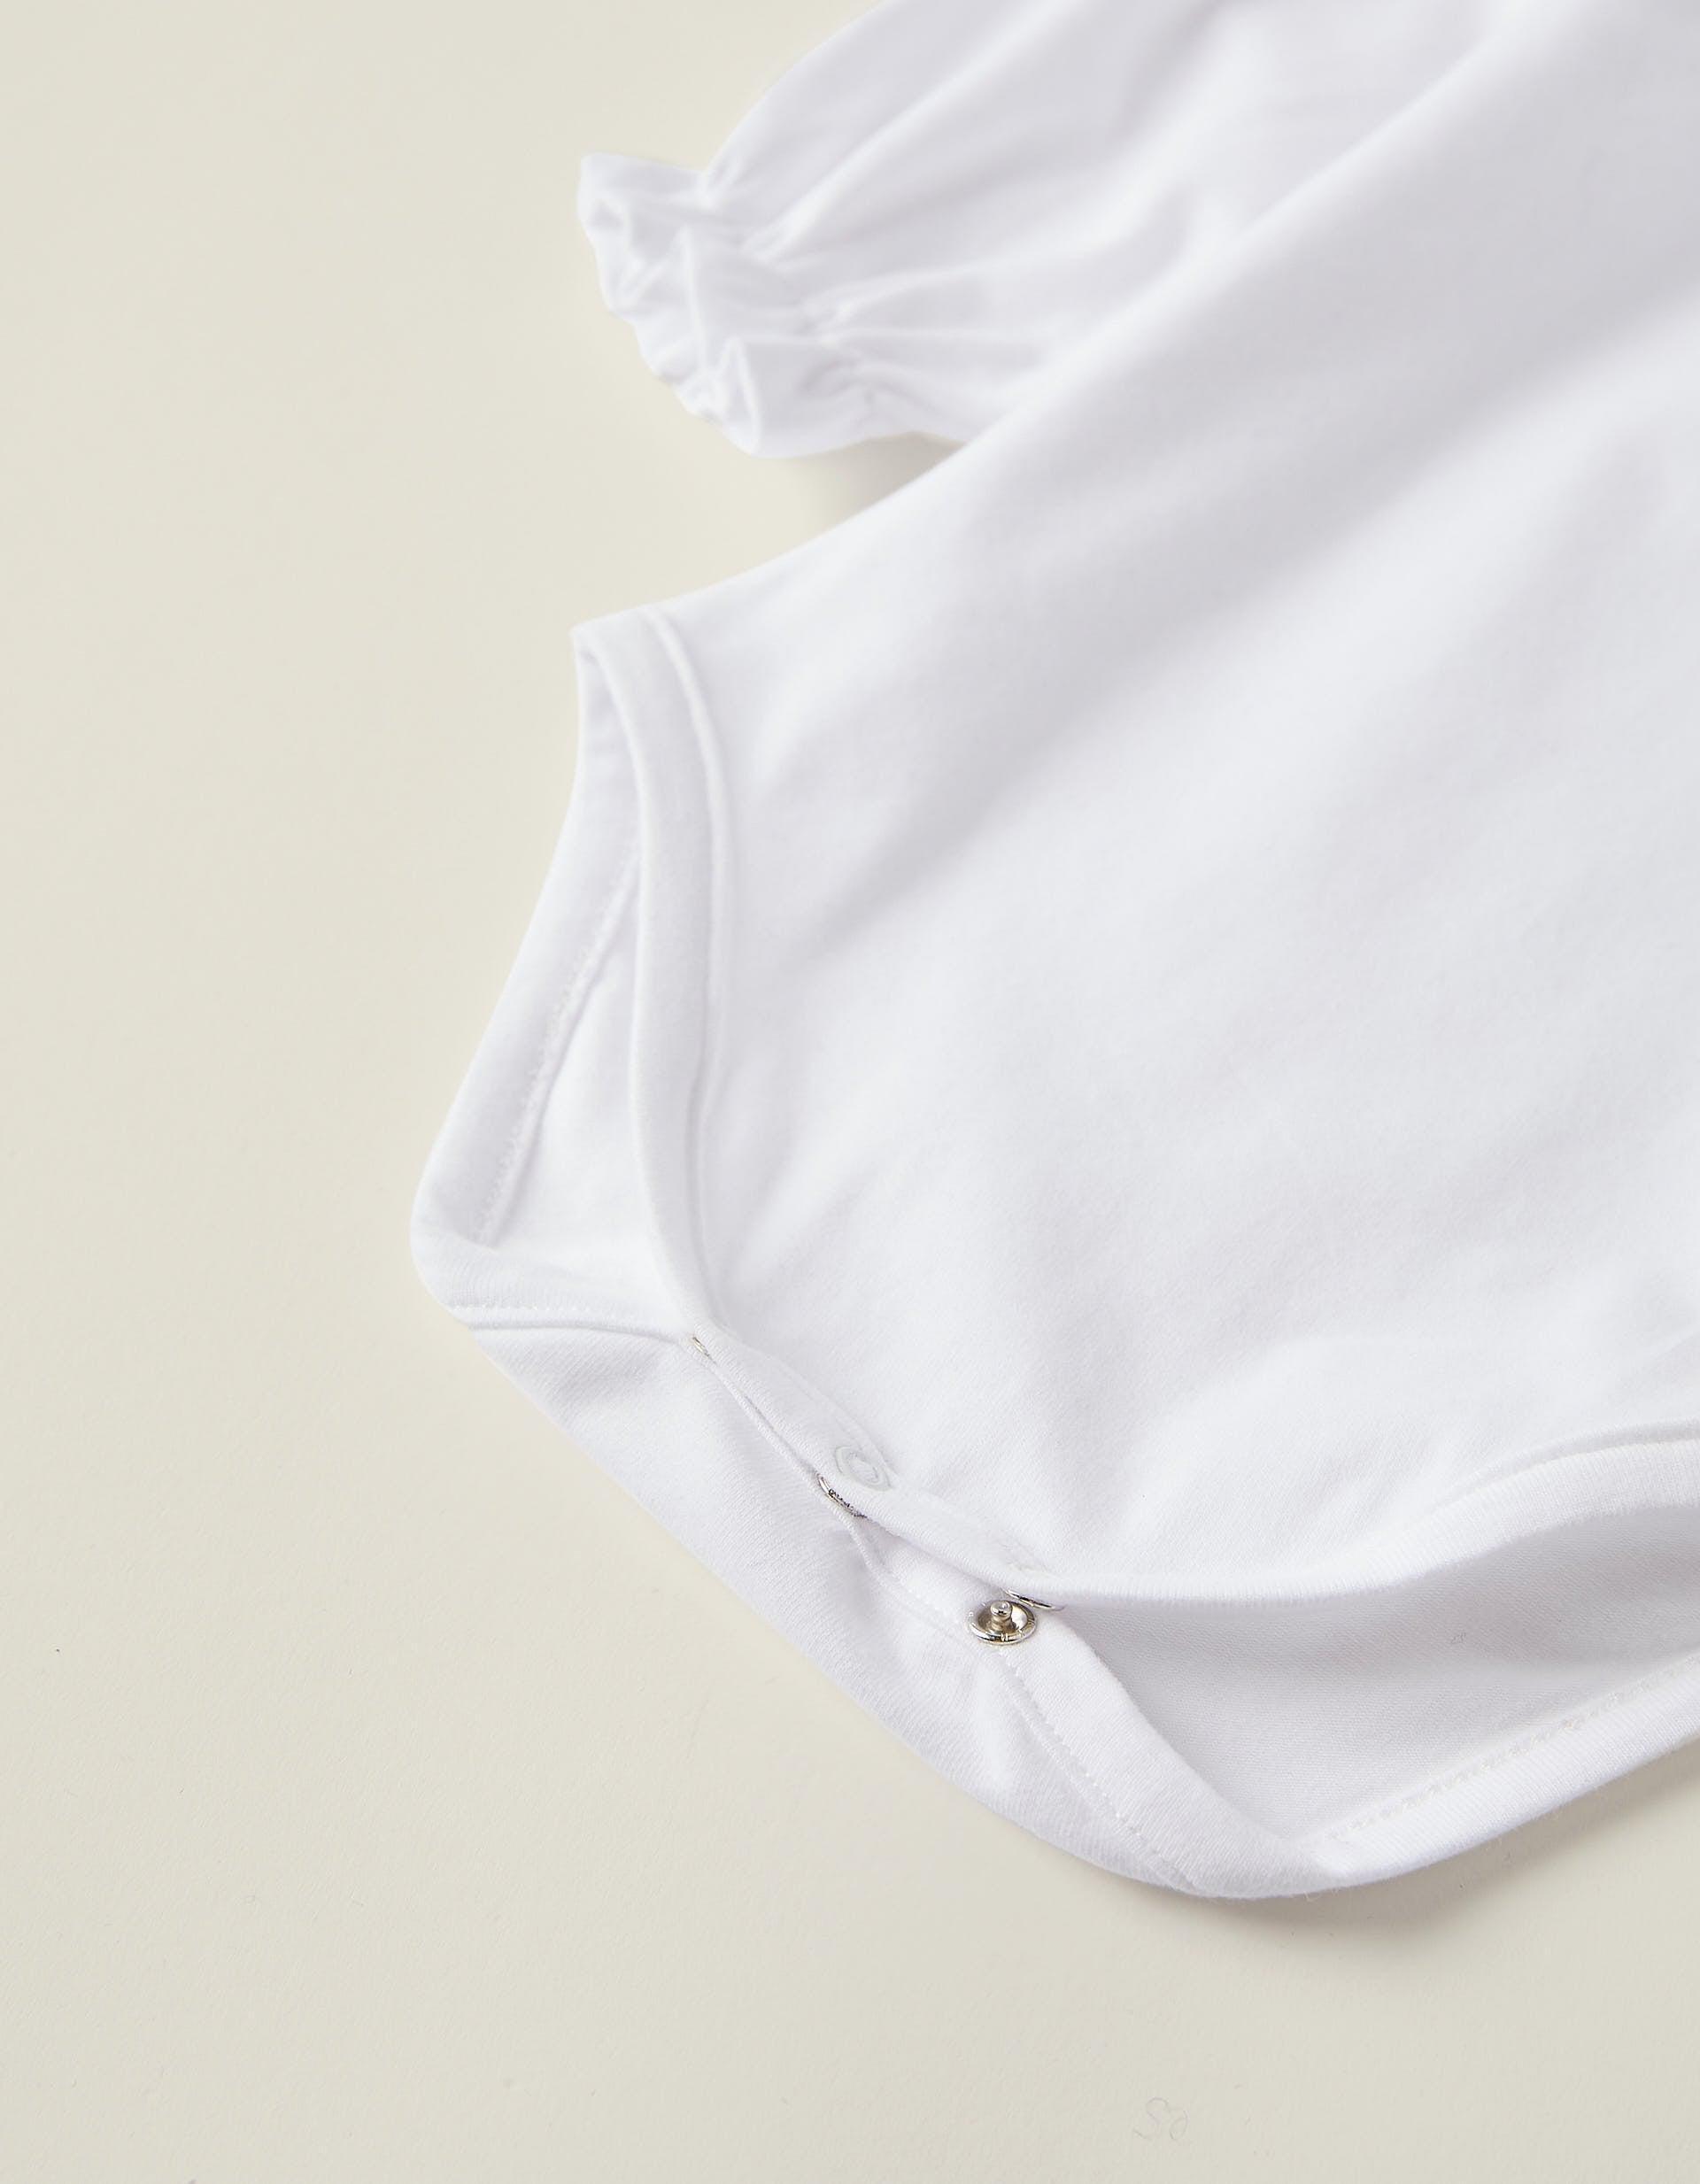 Gant - White Embroidered Bodysuit, Baby Girls